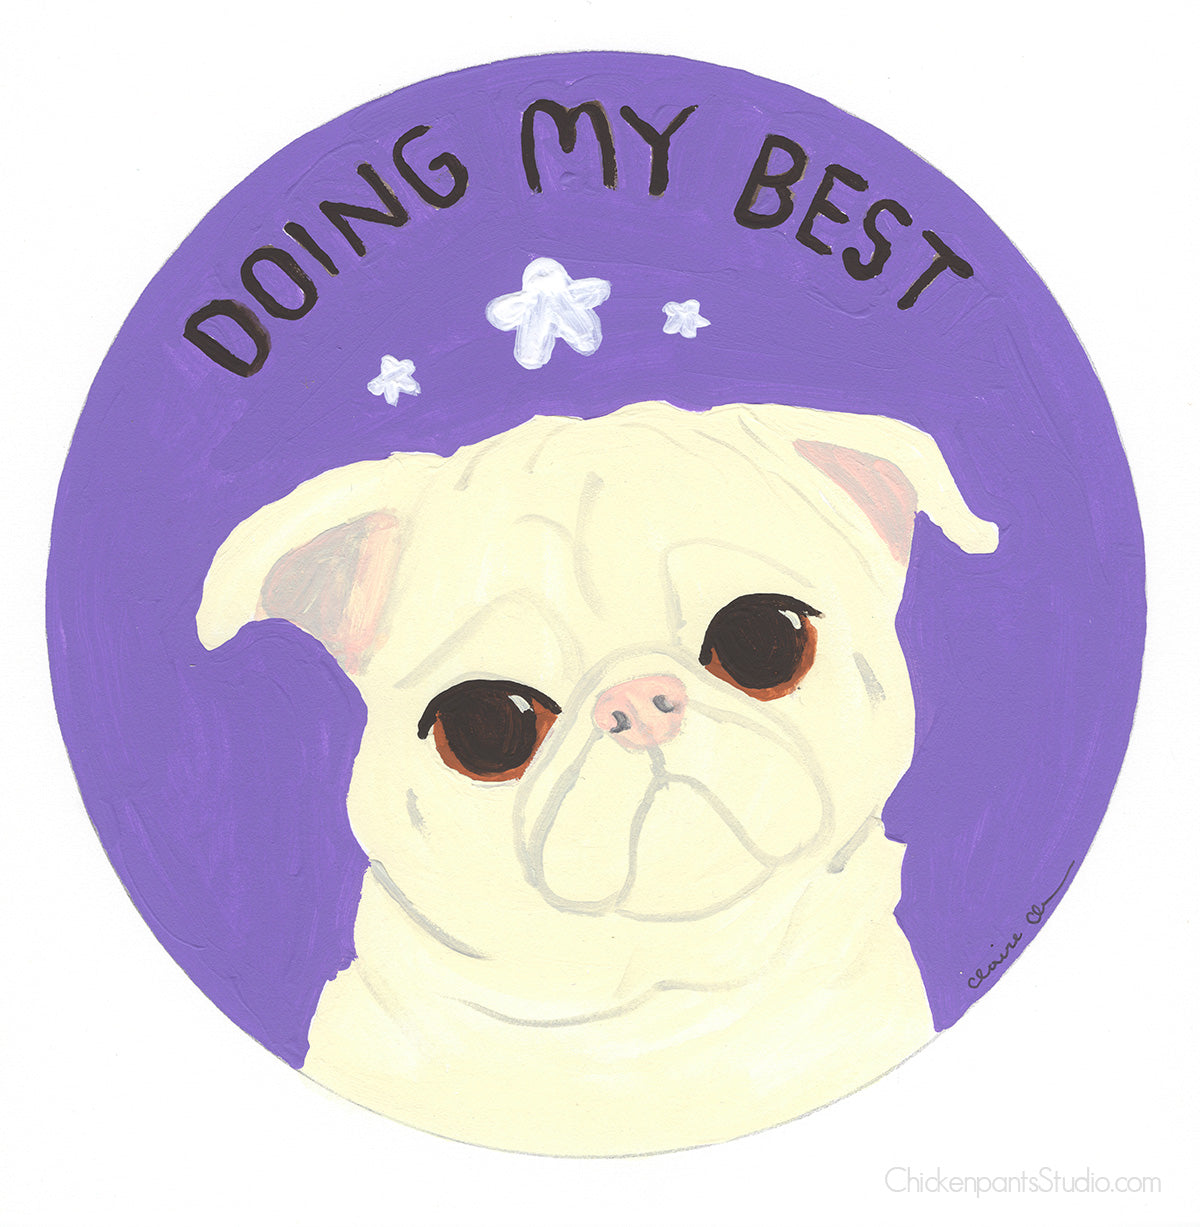 Doing My Best - Original Pug Painting